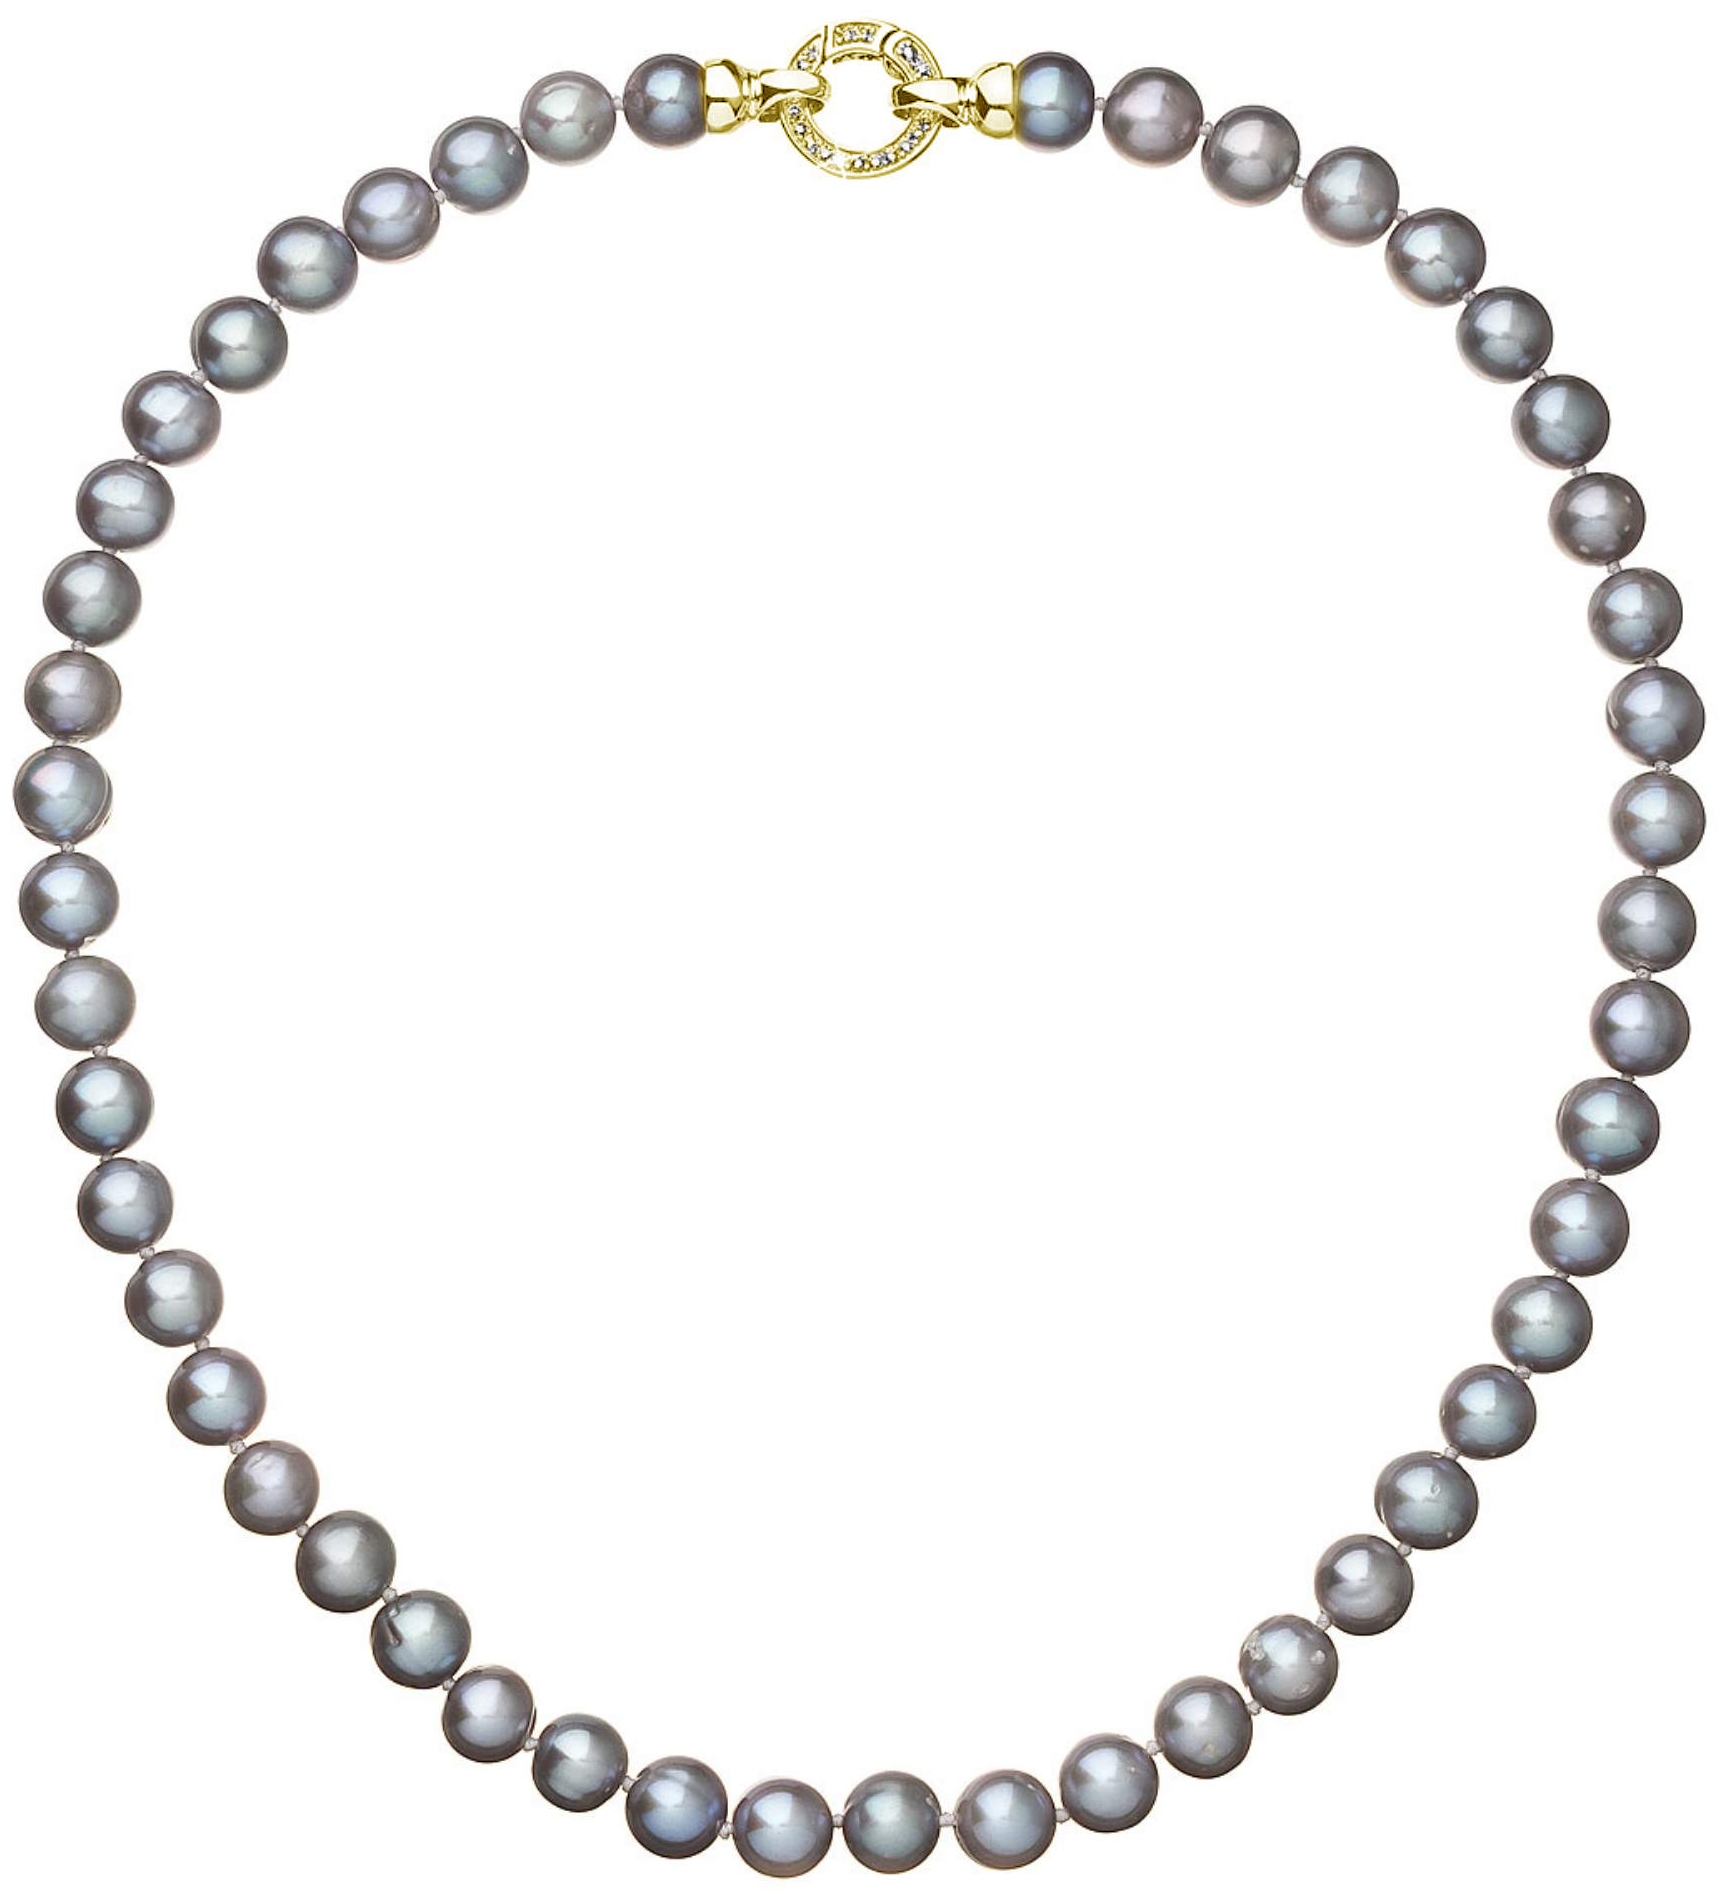 Perlový náhrdelník z pravých riečnych periel sivý 22028.3 grey Au plating